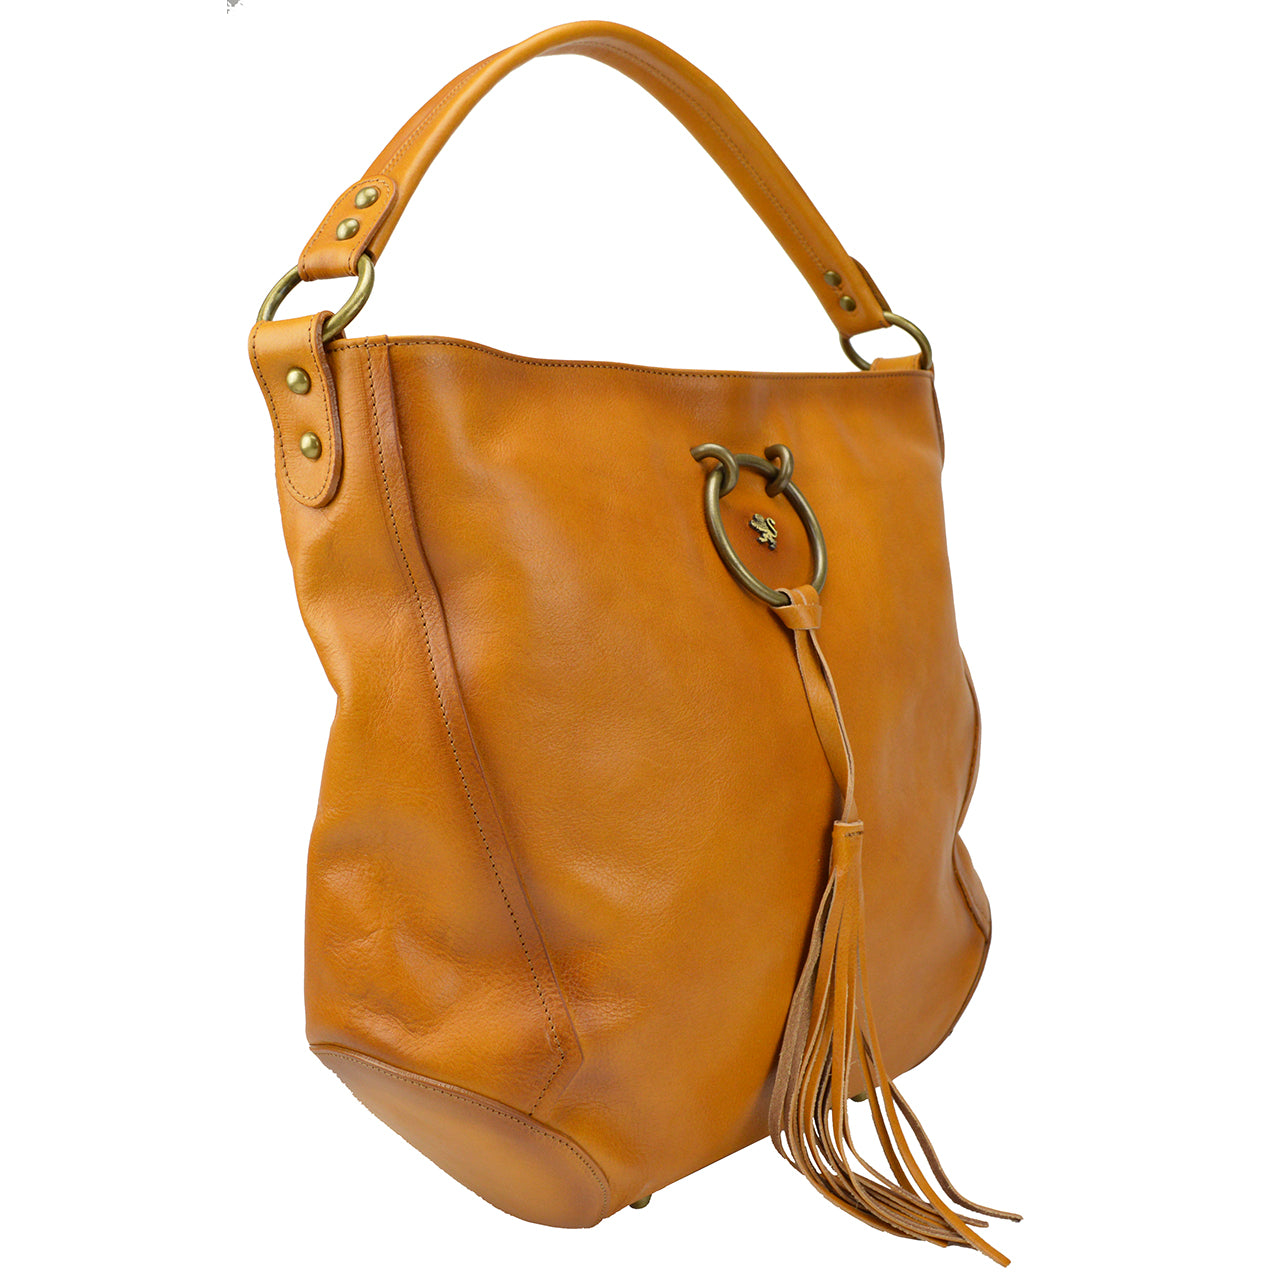 Pratesi Faella B477 Shoulder Bag in genuine Italian leather